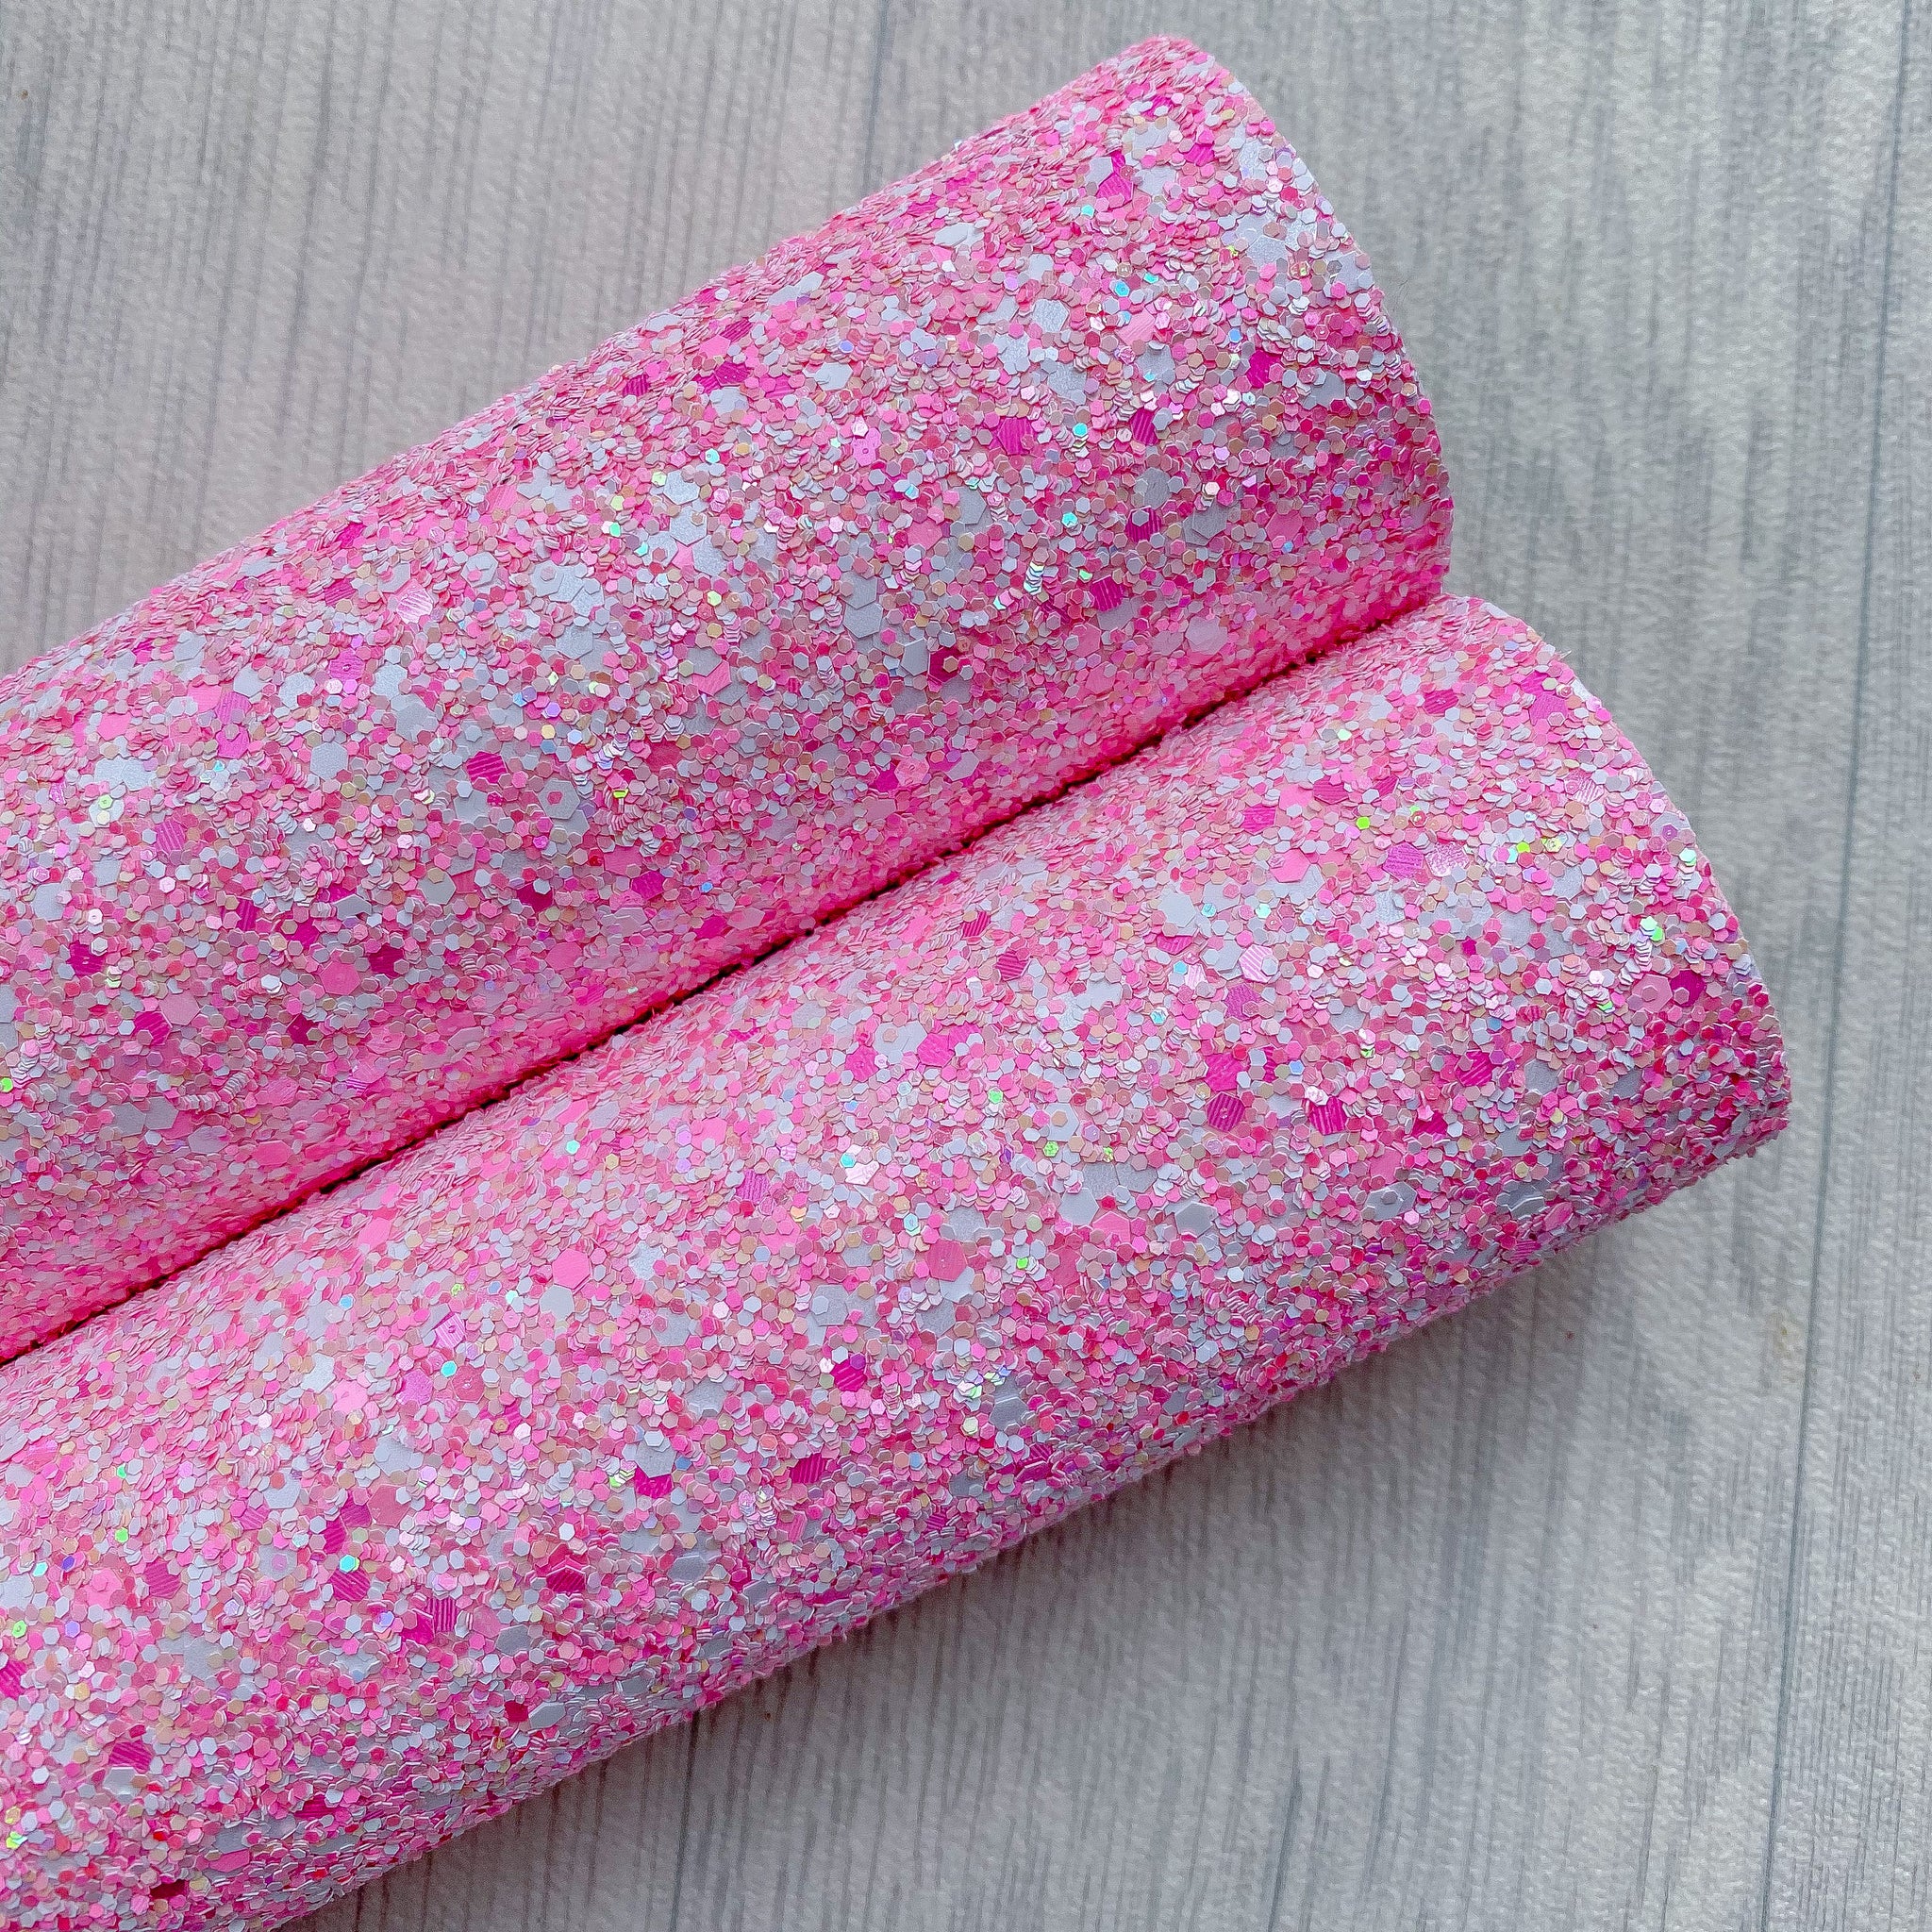 Pink white glitter Chunky Glitter fabric A4 sheet bow crafts supplies glitter material wallpaper maker hair bows 